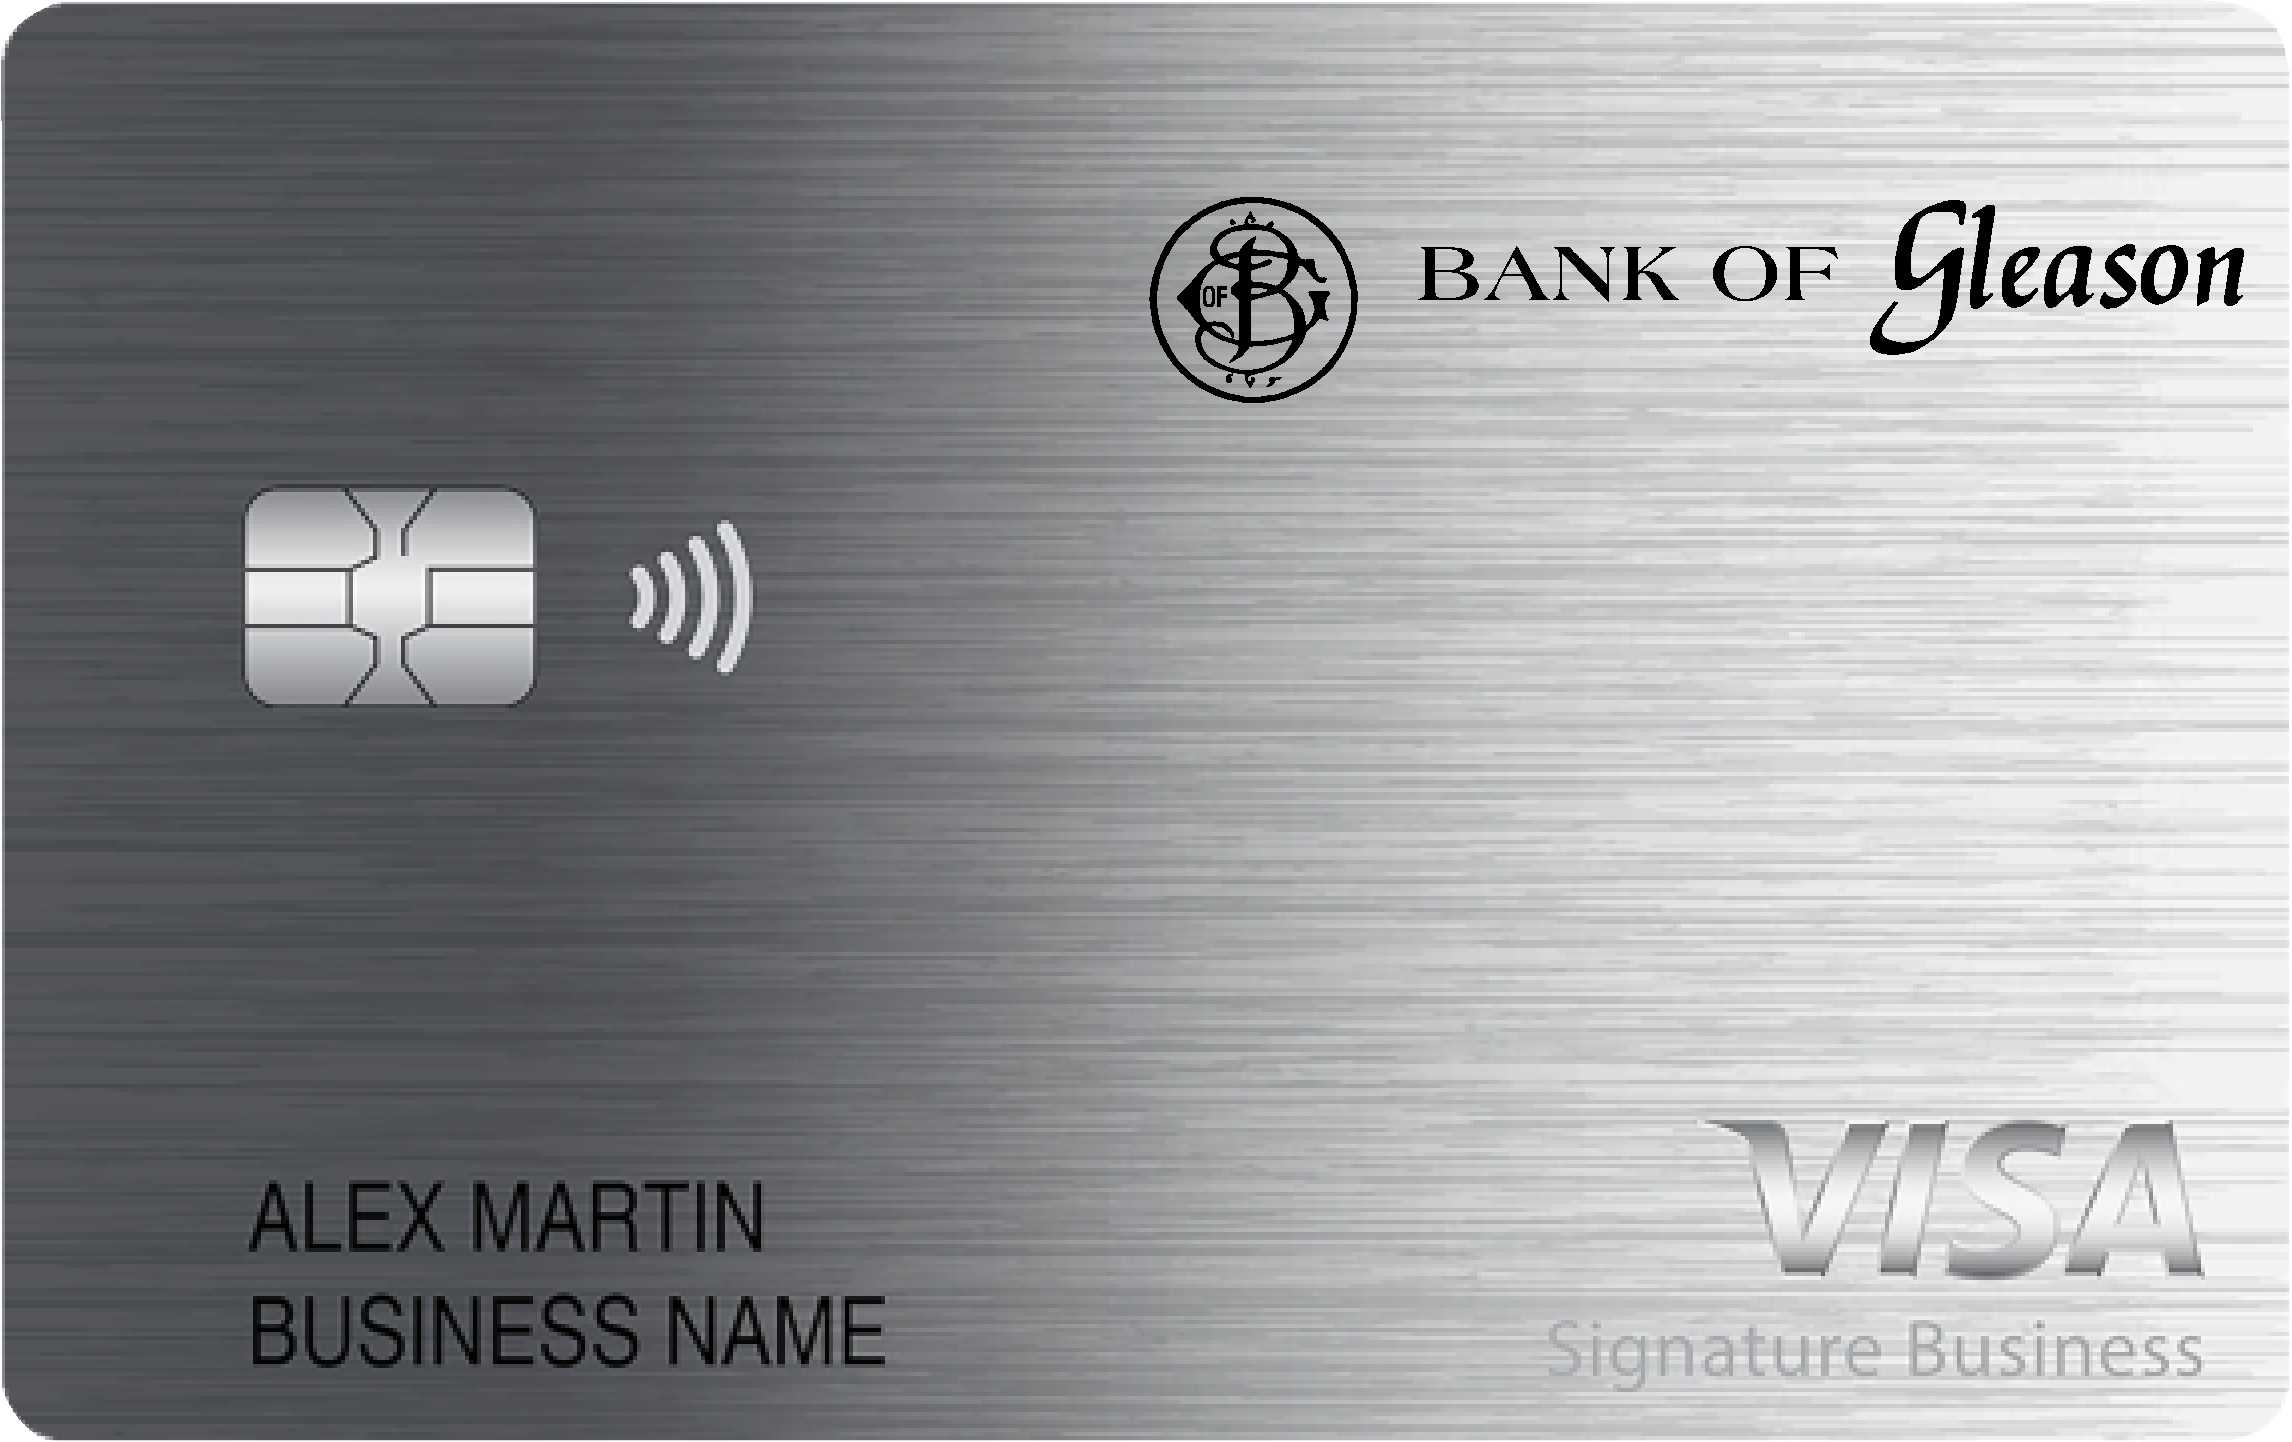 BANK OF Gleason Smart Business Rewards Card